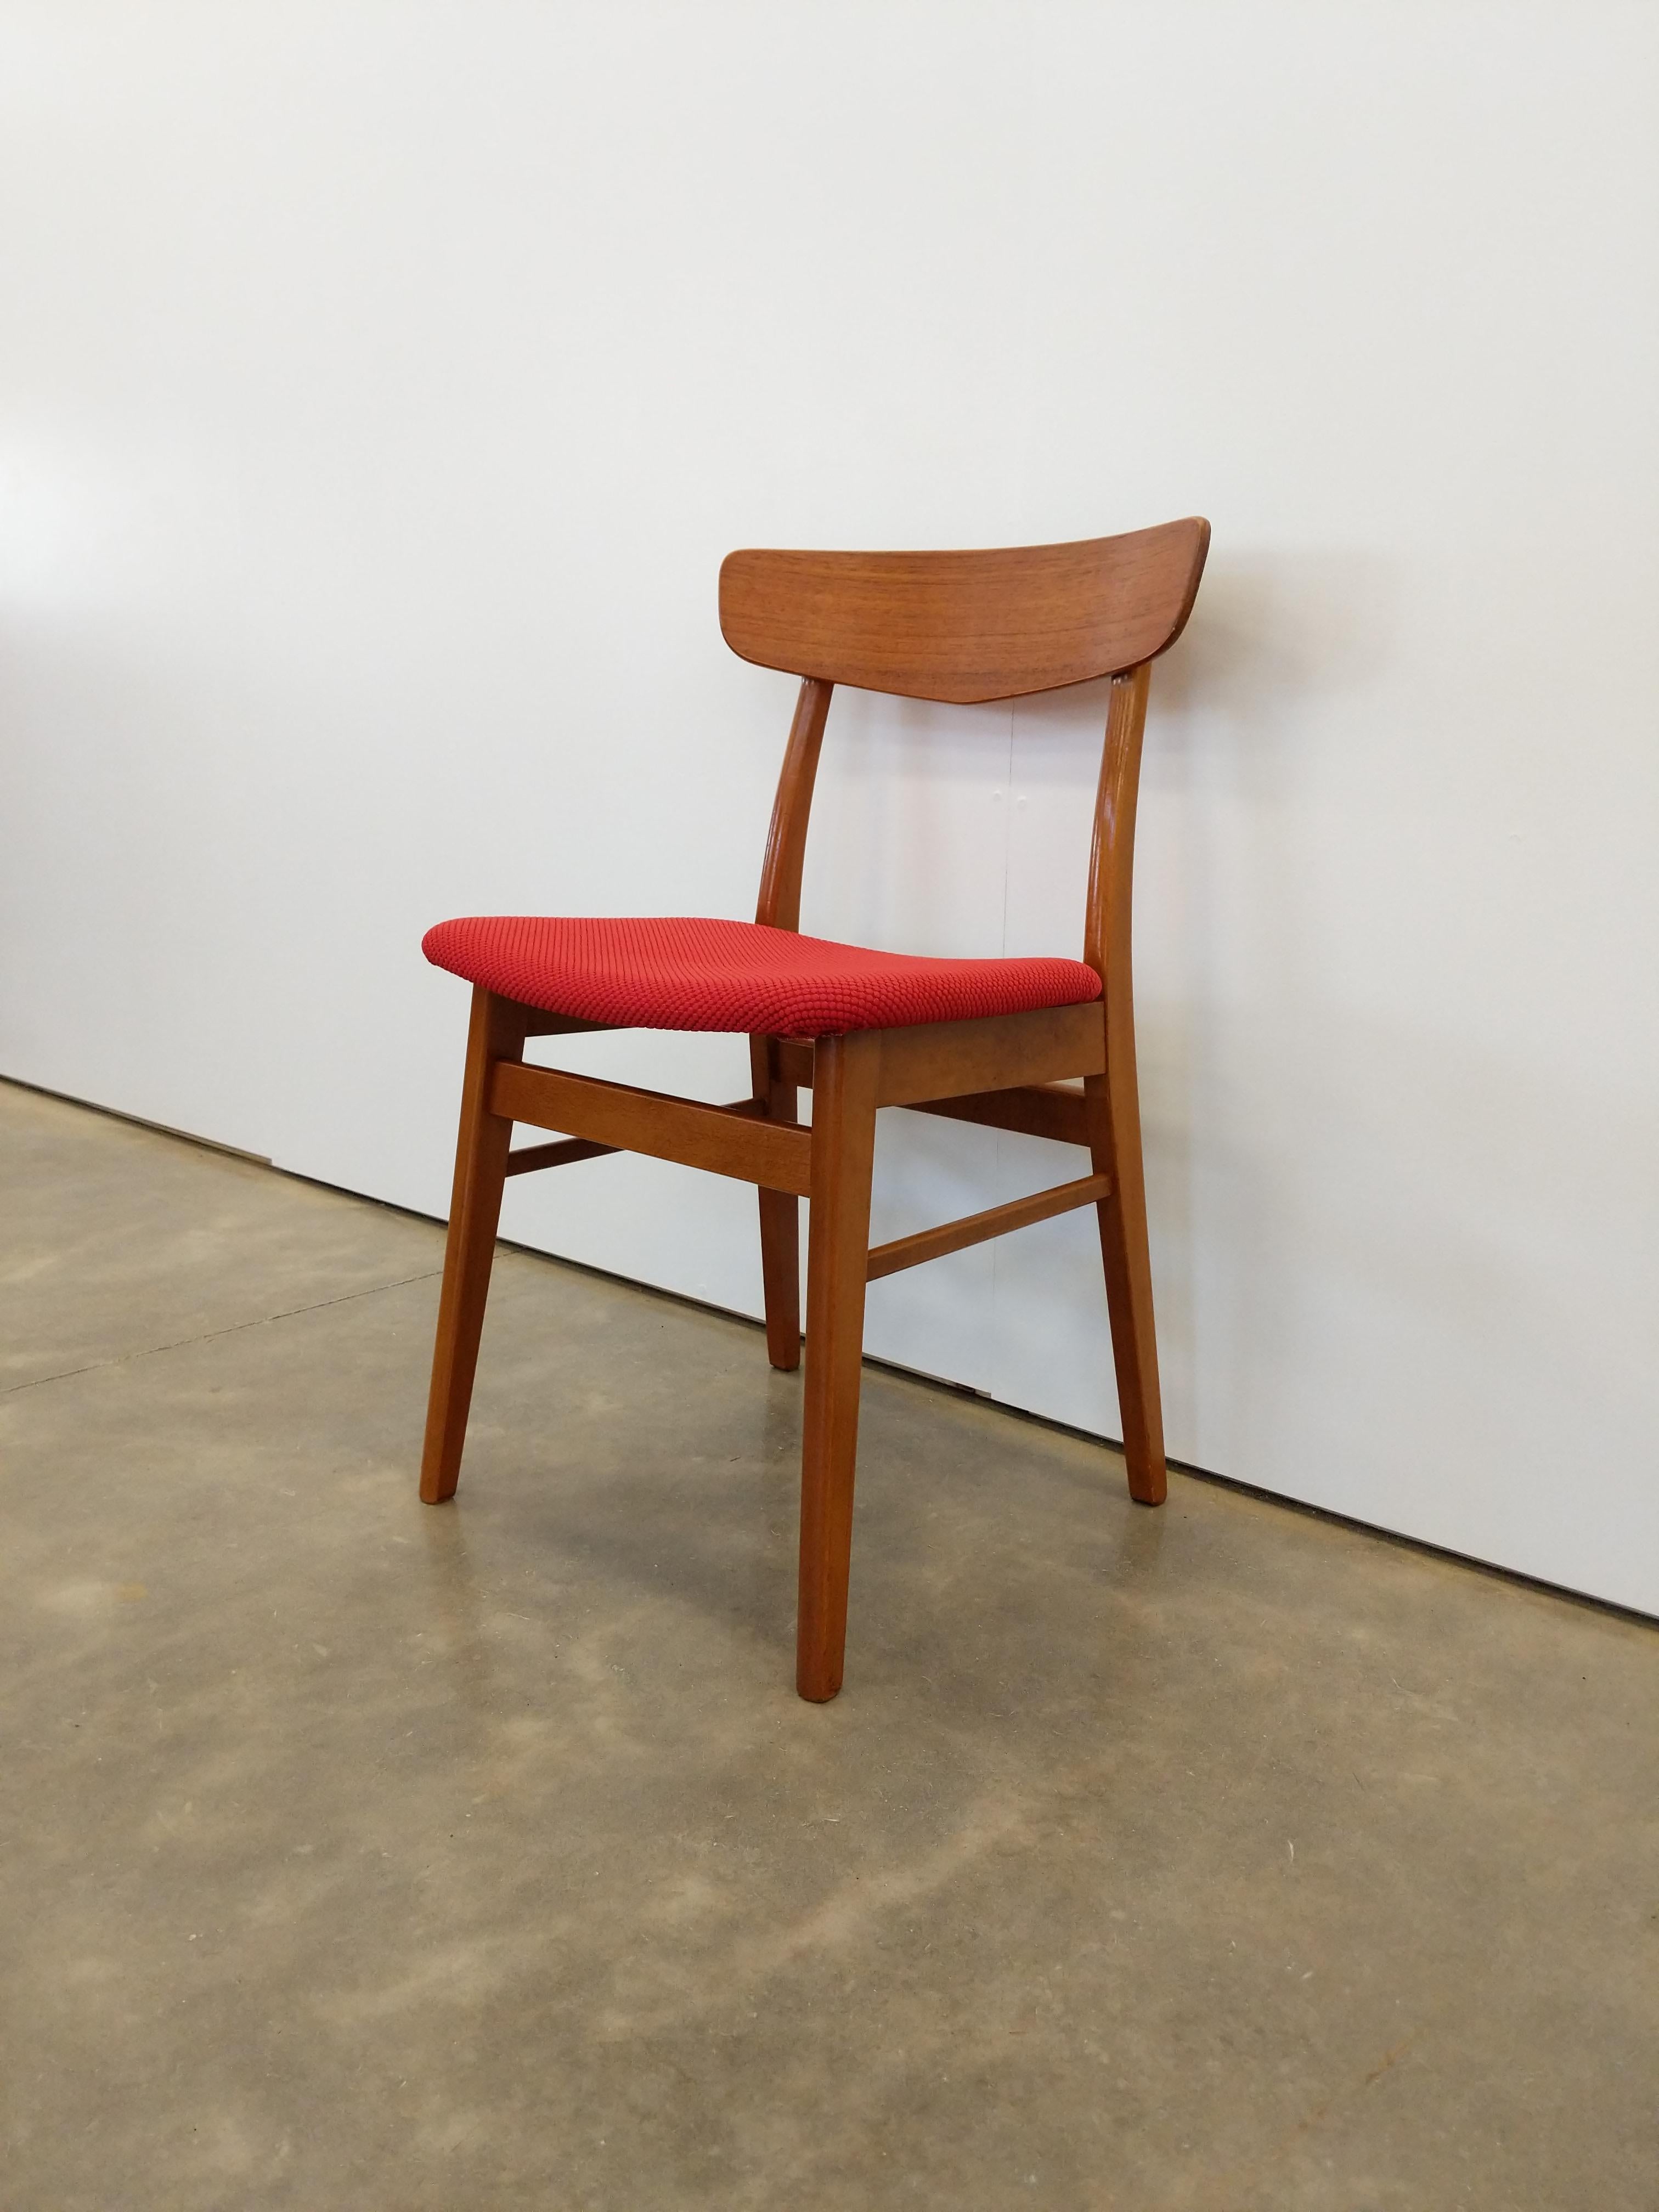 20th Century Vintage Danish Mid Century Modern Farstrup Dining Chair For Sale